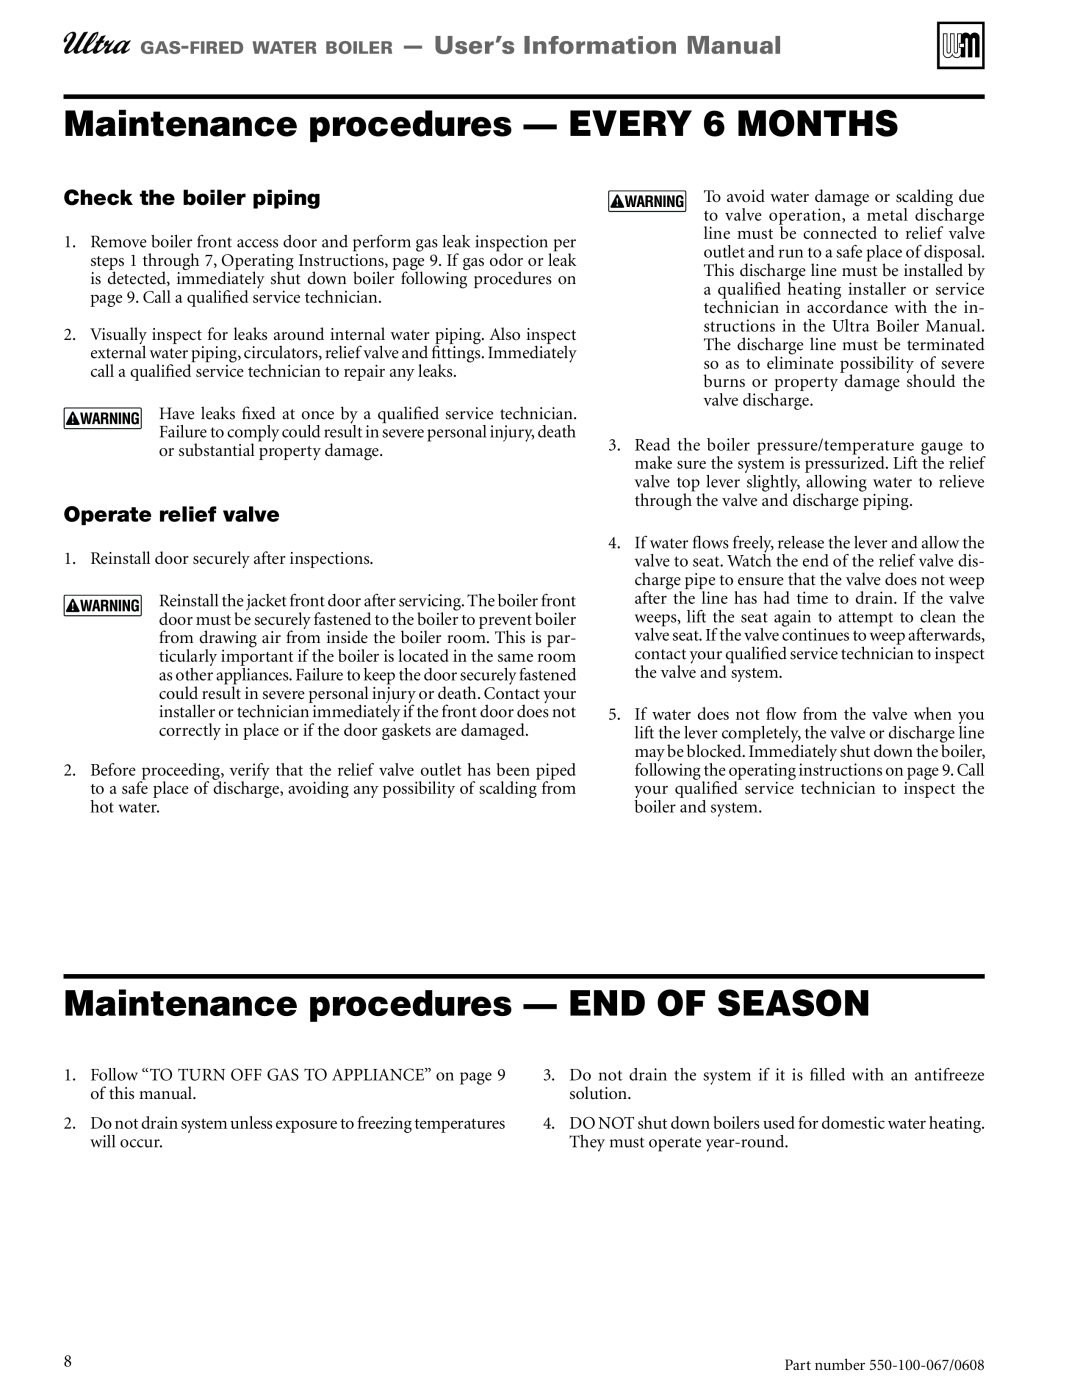 Weil-McLain 550-100-067/0608 manual Maintenance procedures - EVERY 6 MONTHS, Maintenance procedures - END OF SEASON 